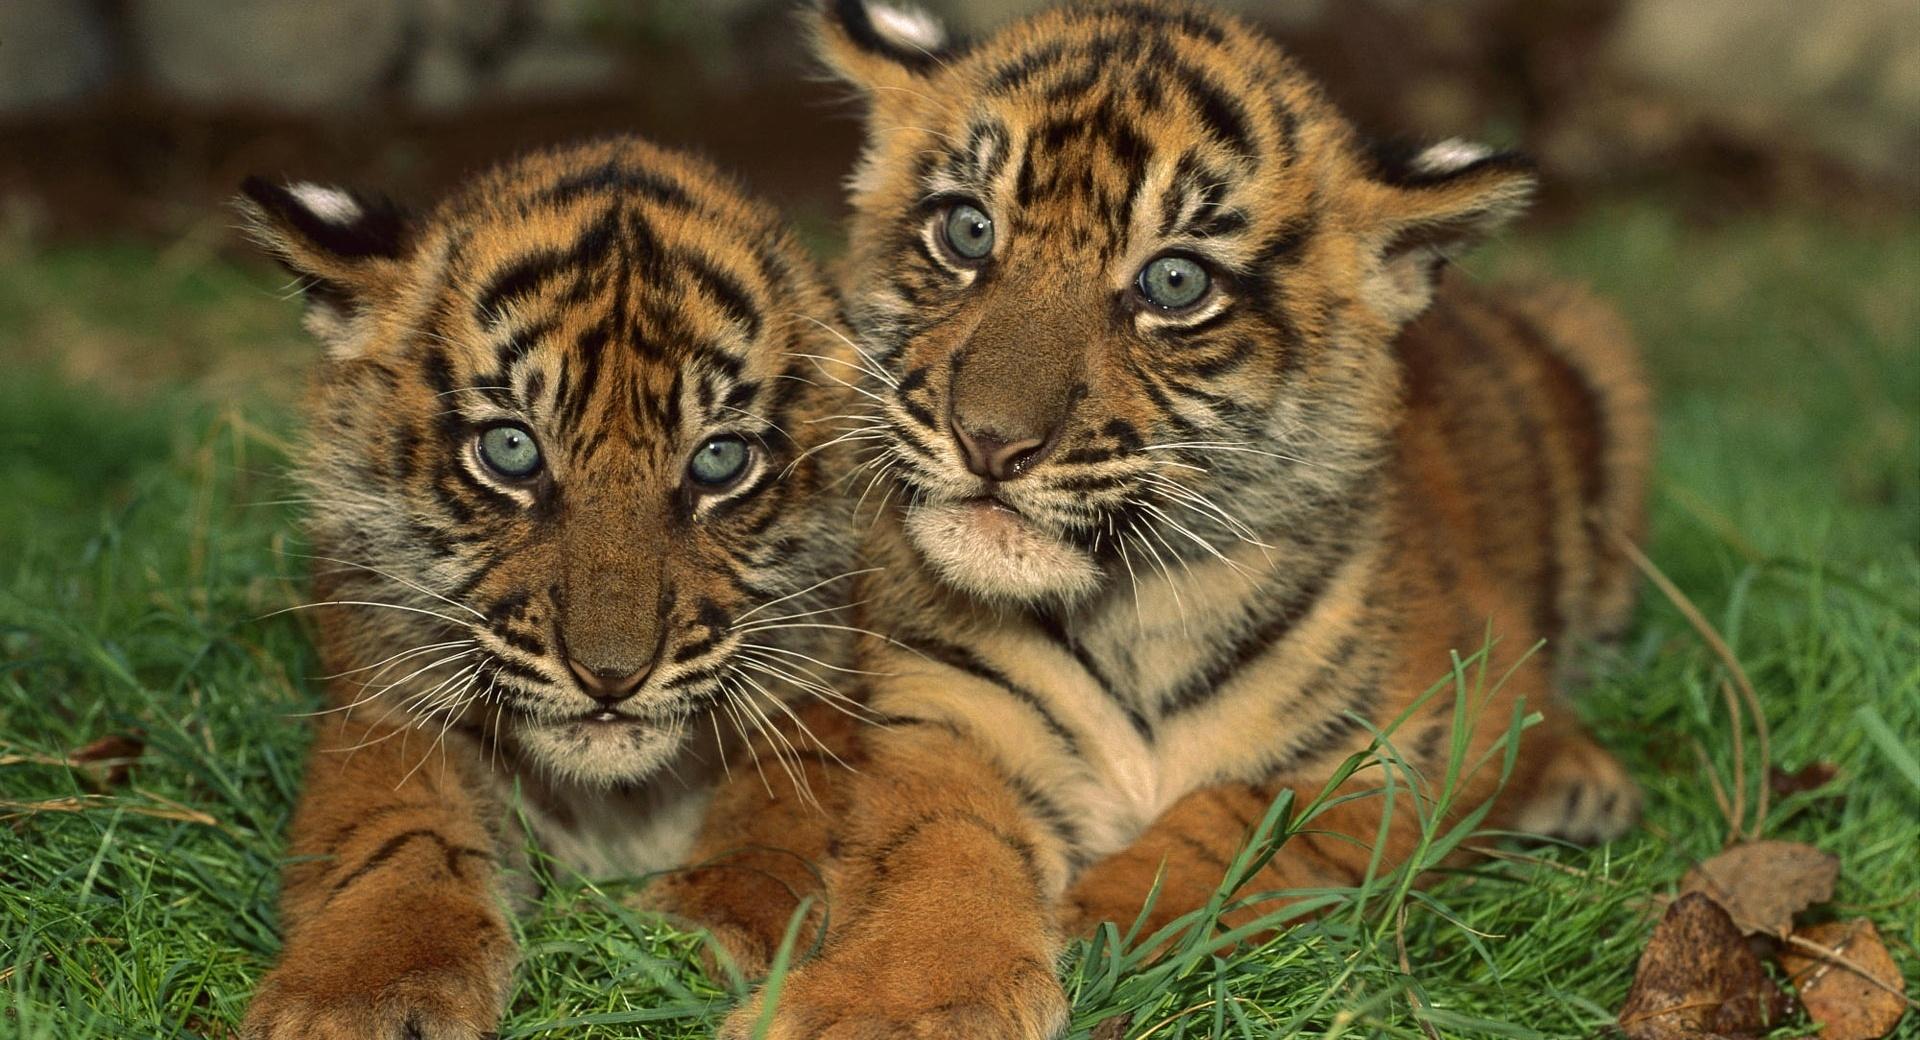 Sumatran Tiger Cubs at 1152 x 864 size wallpapers HD quality